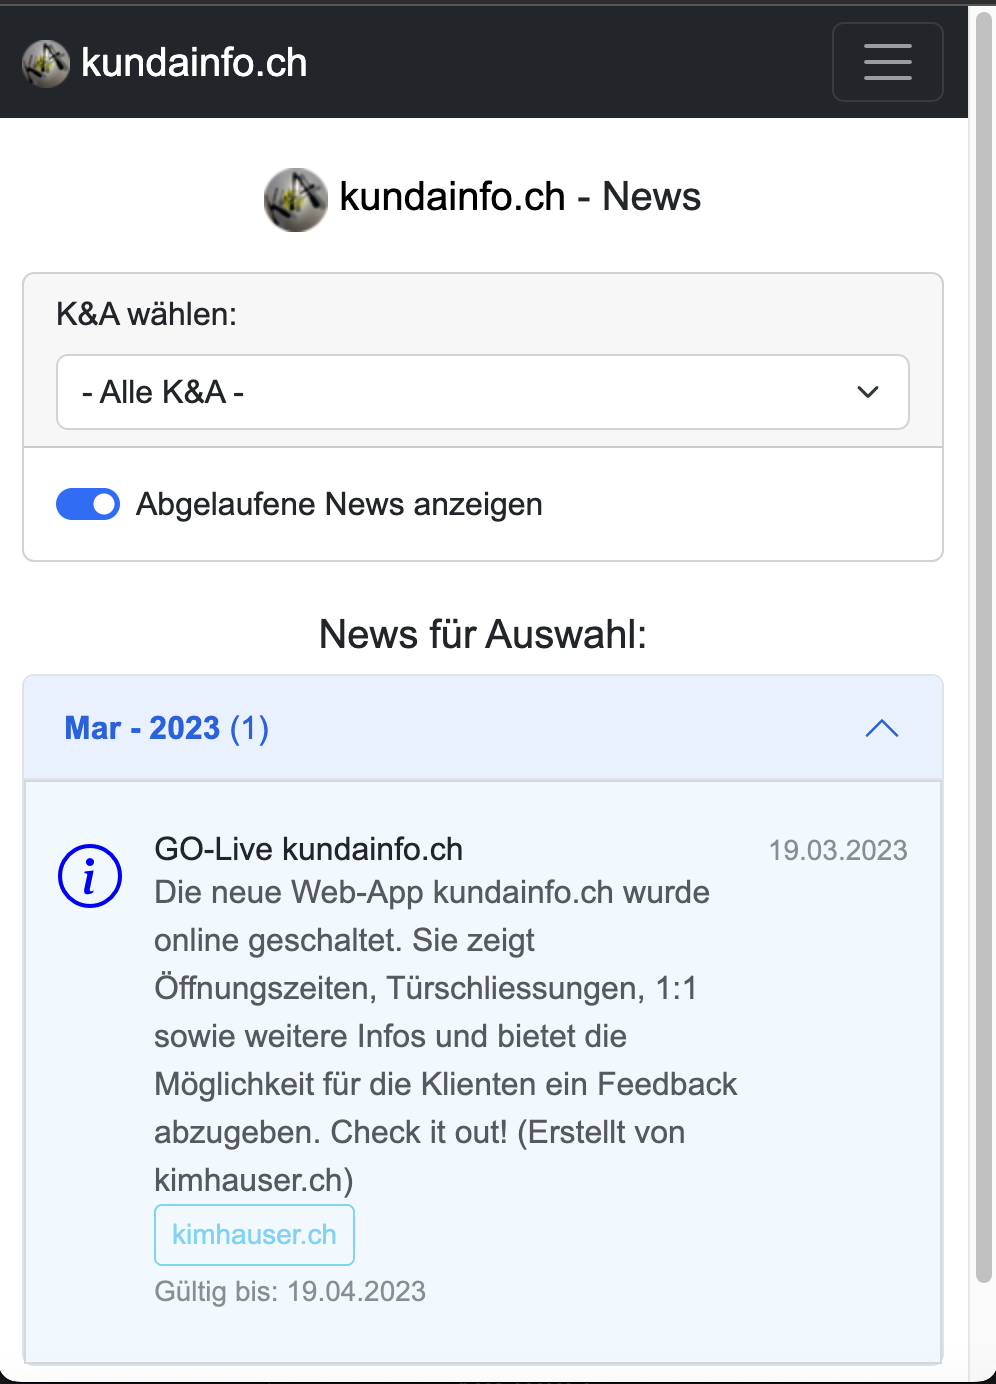 Newspage of kundainfo.ch